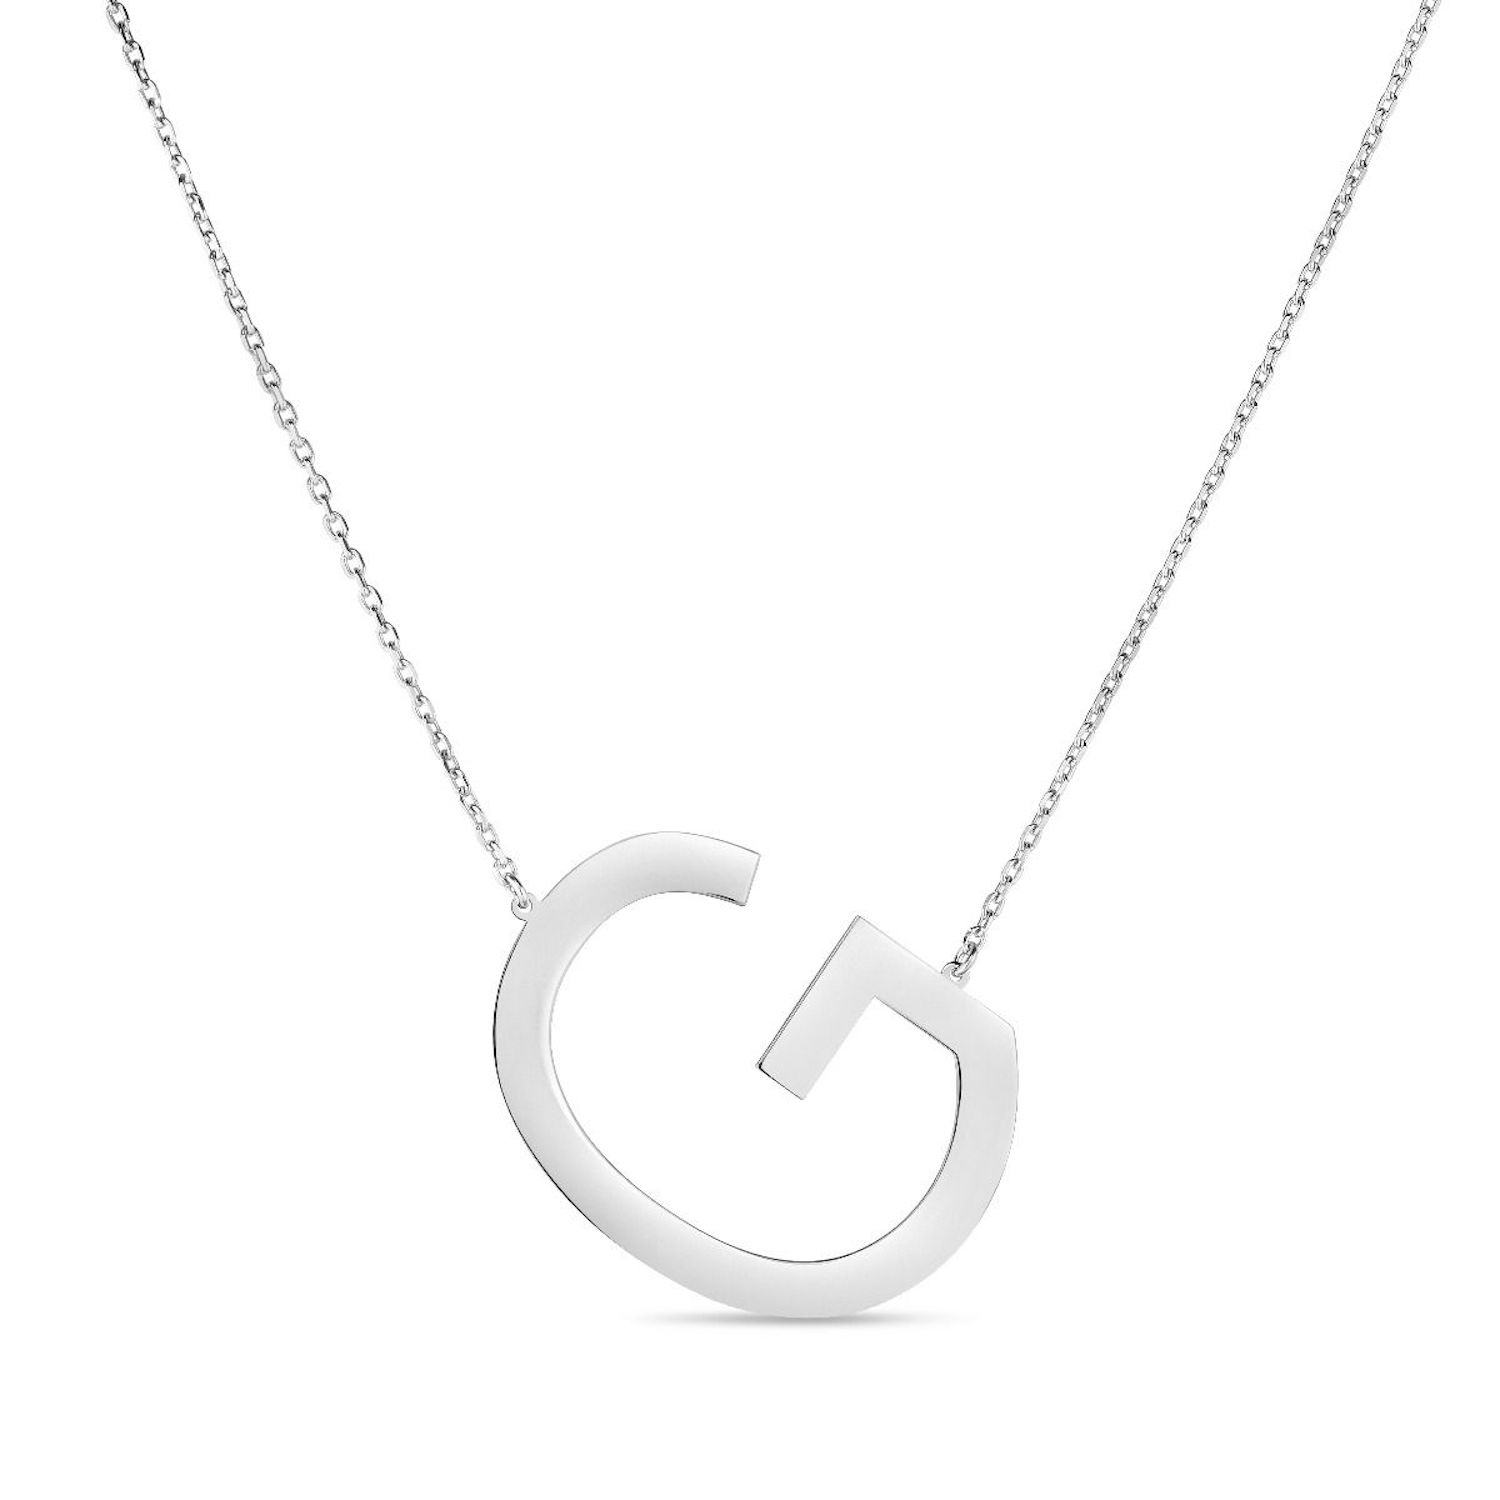 Sterling Silver Sideways Initials Letter Pendant Necklace 16"-18" Adj. 1.5" - G